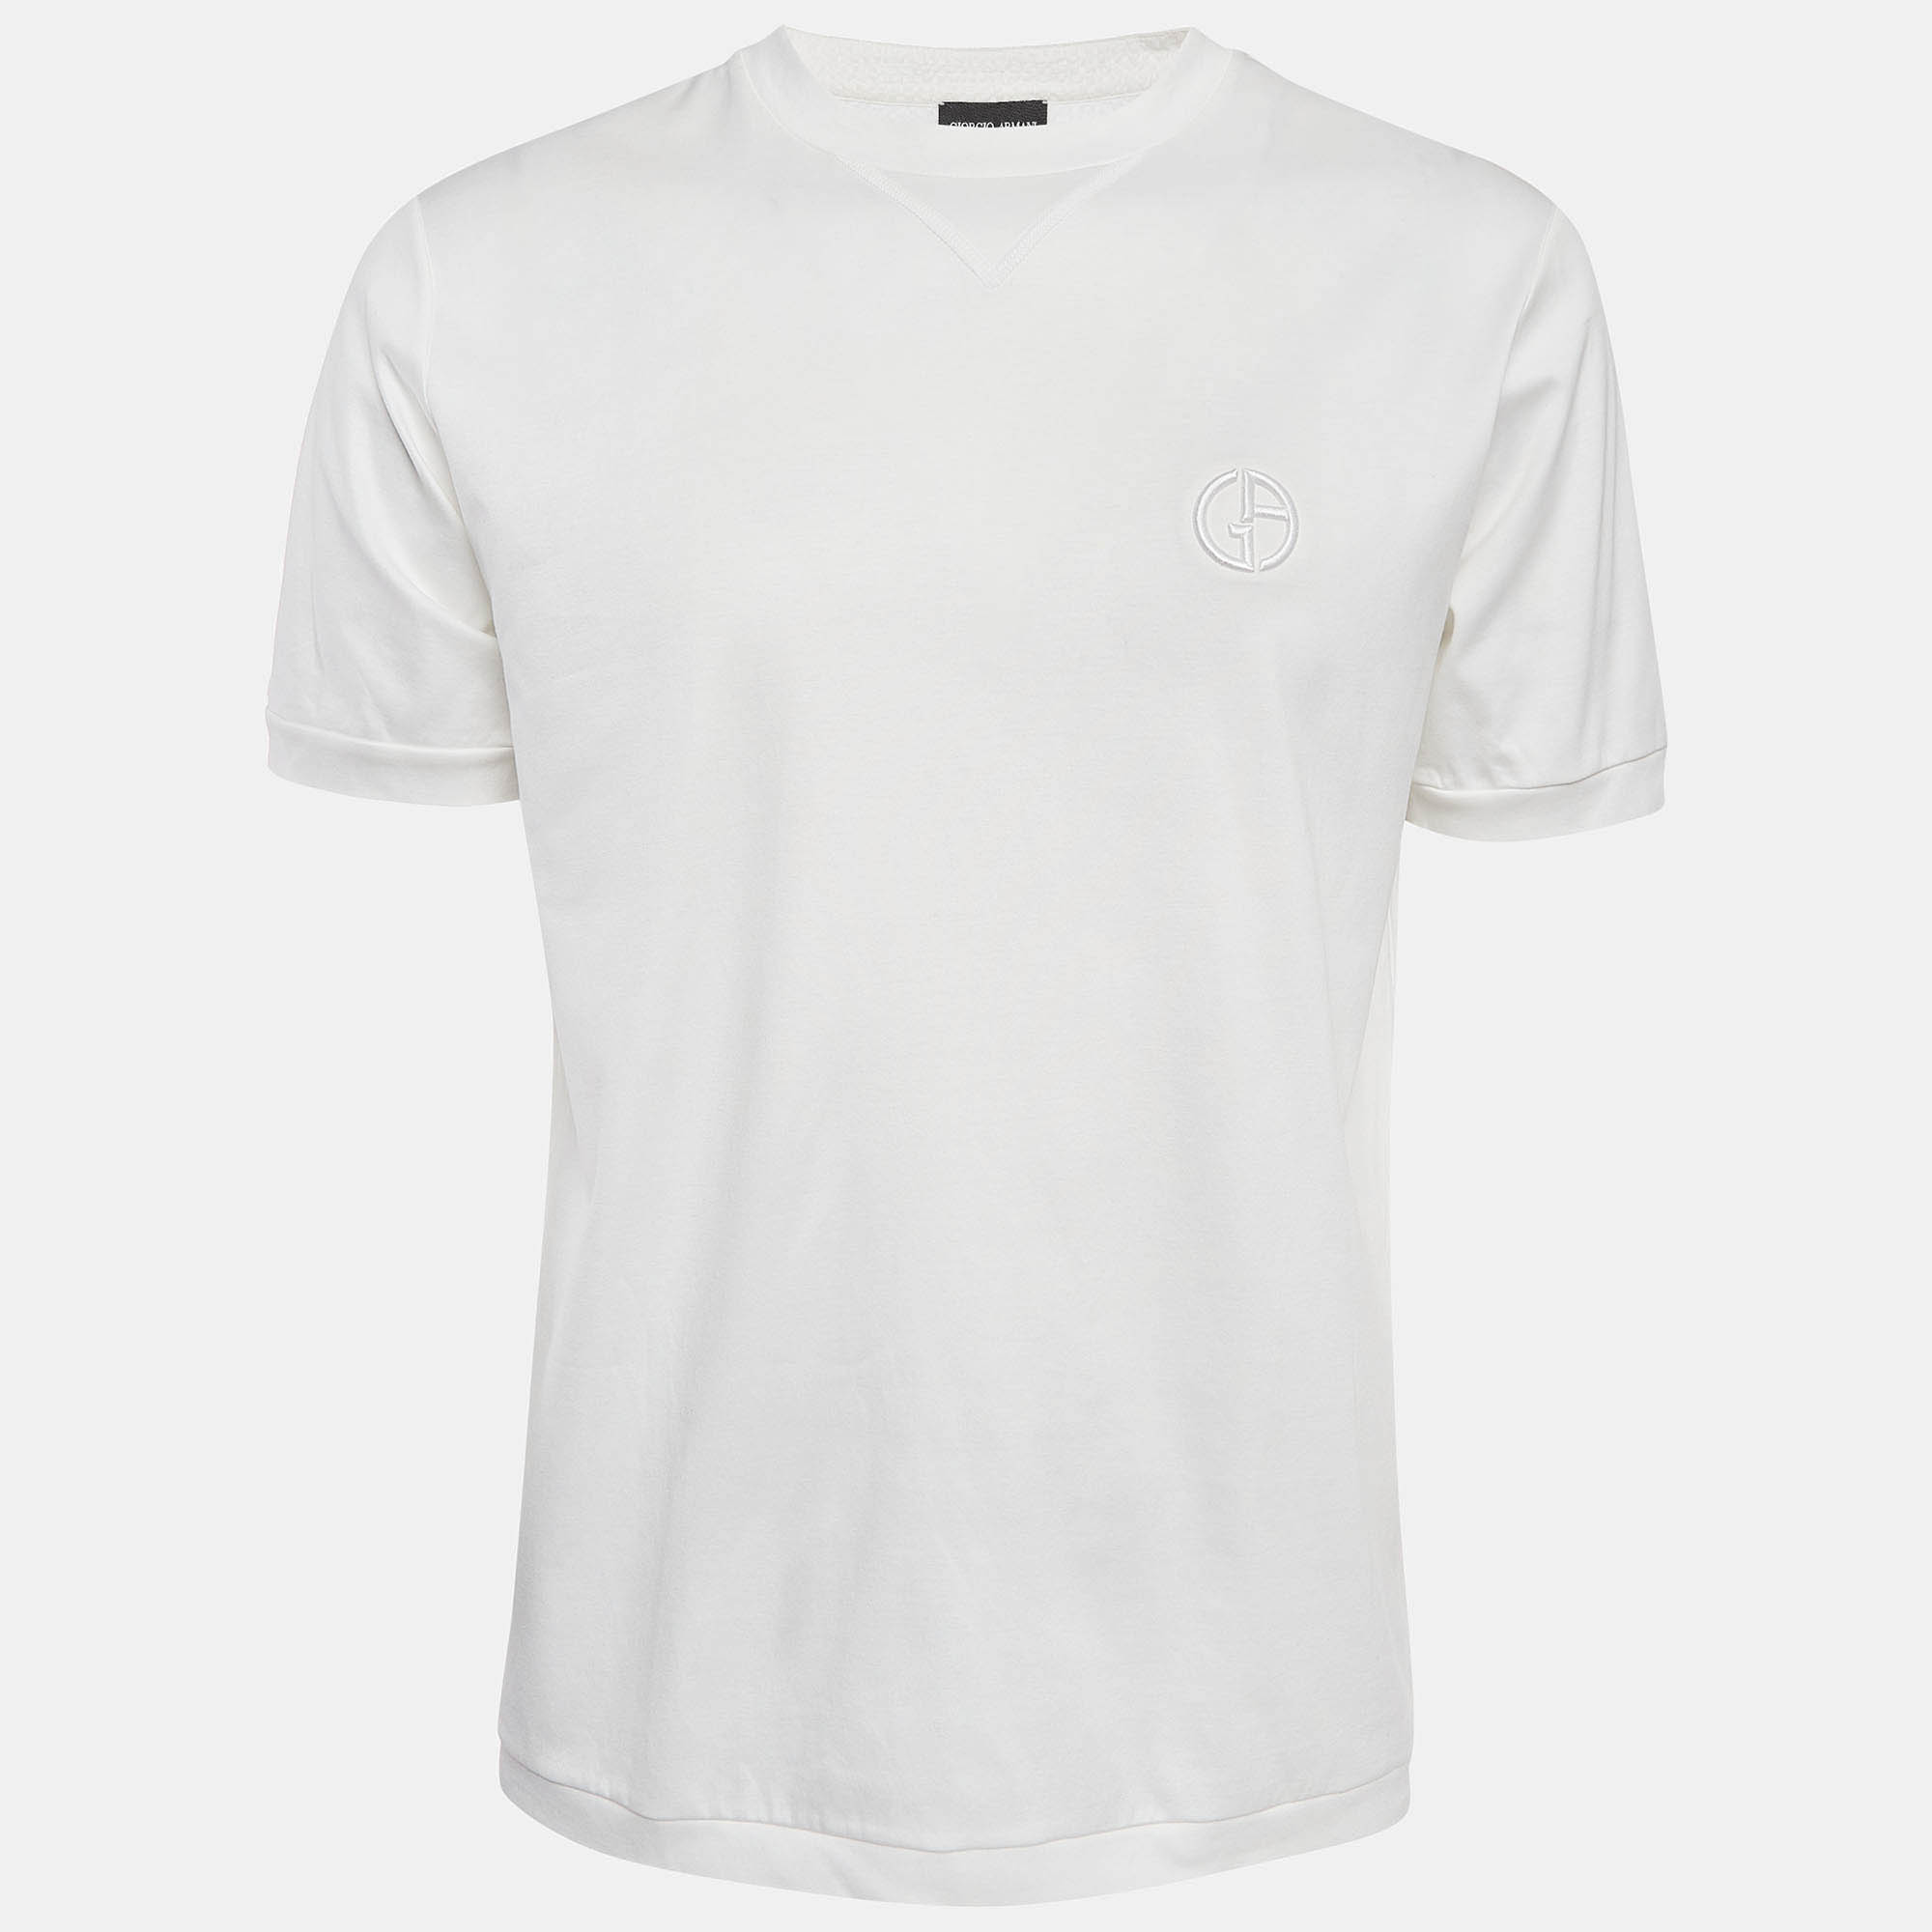 Giorgio armani white logo embroidered jersey t-shirt m